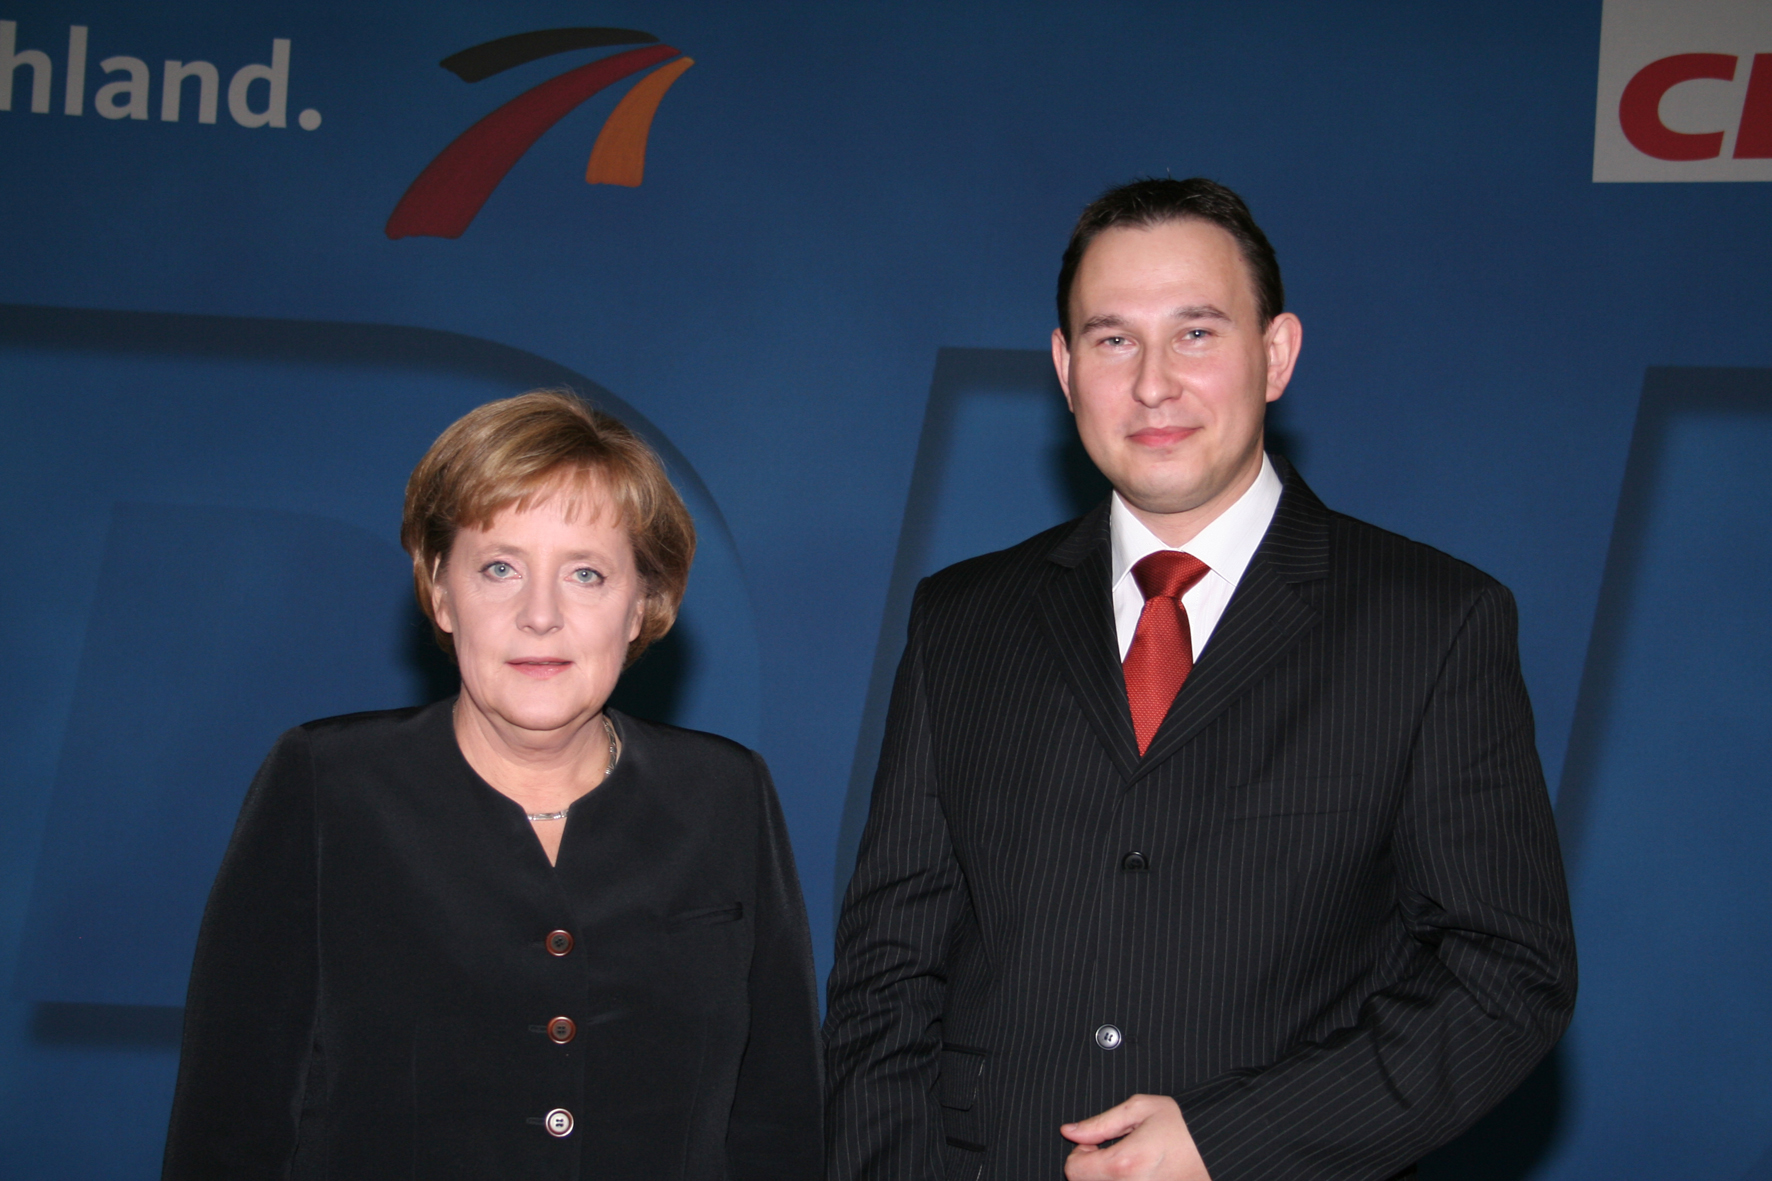 Wladarz mit Bundeskanzlerin Merkel 2007 in Berlin